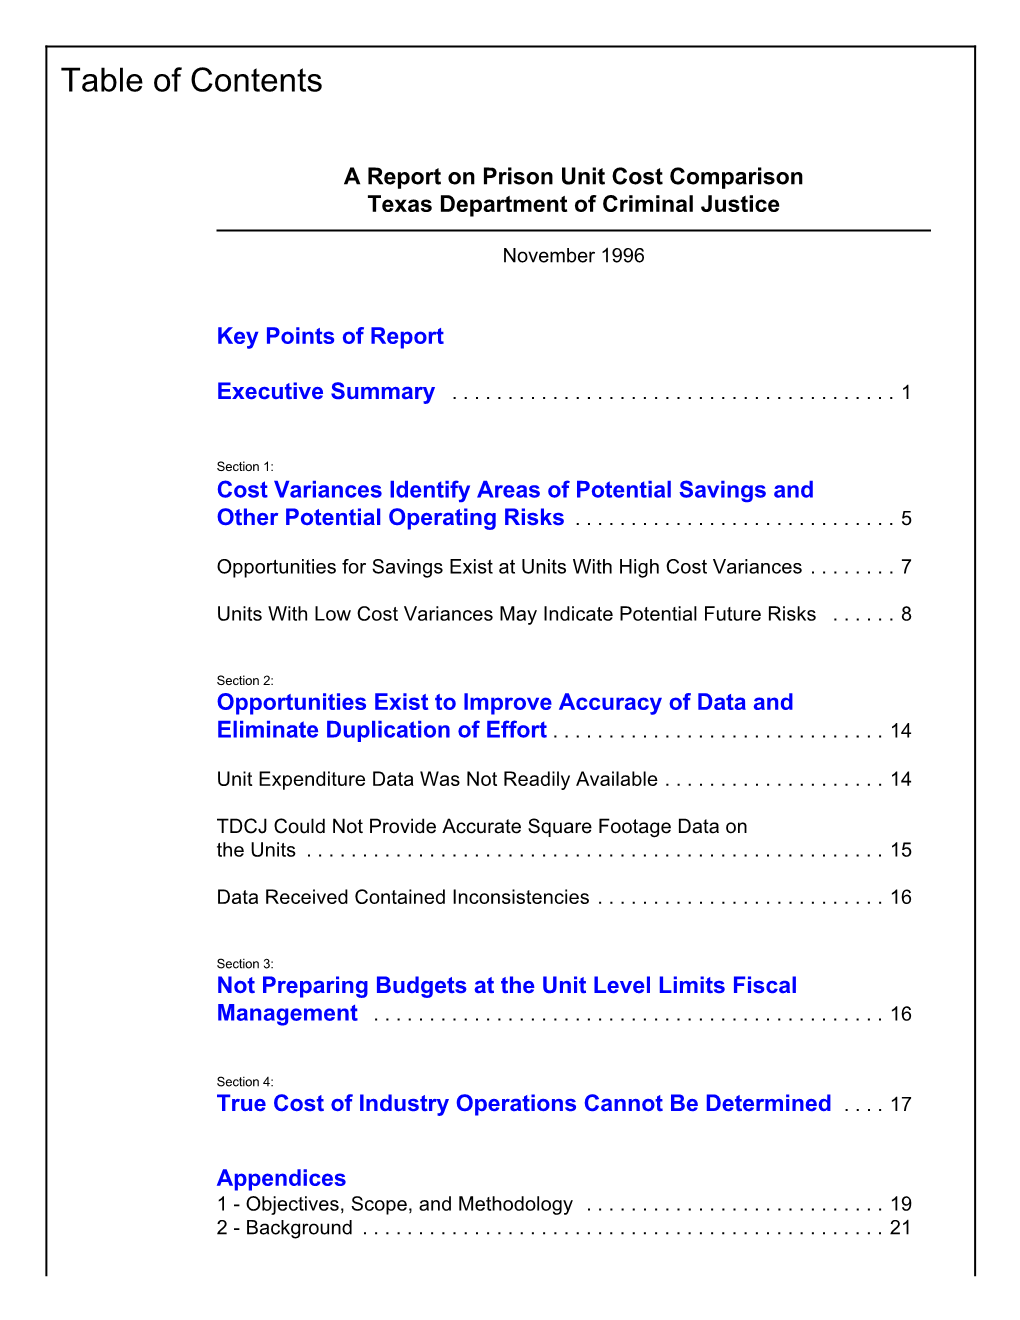 A Report on Prison Unit Cost Comparison Texas Department of Criminal Justice